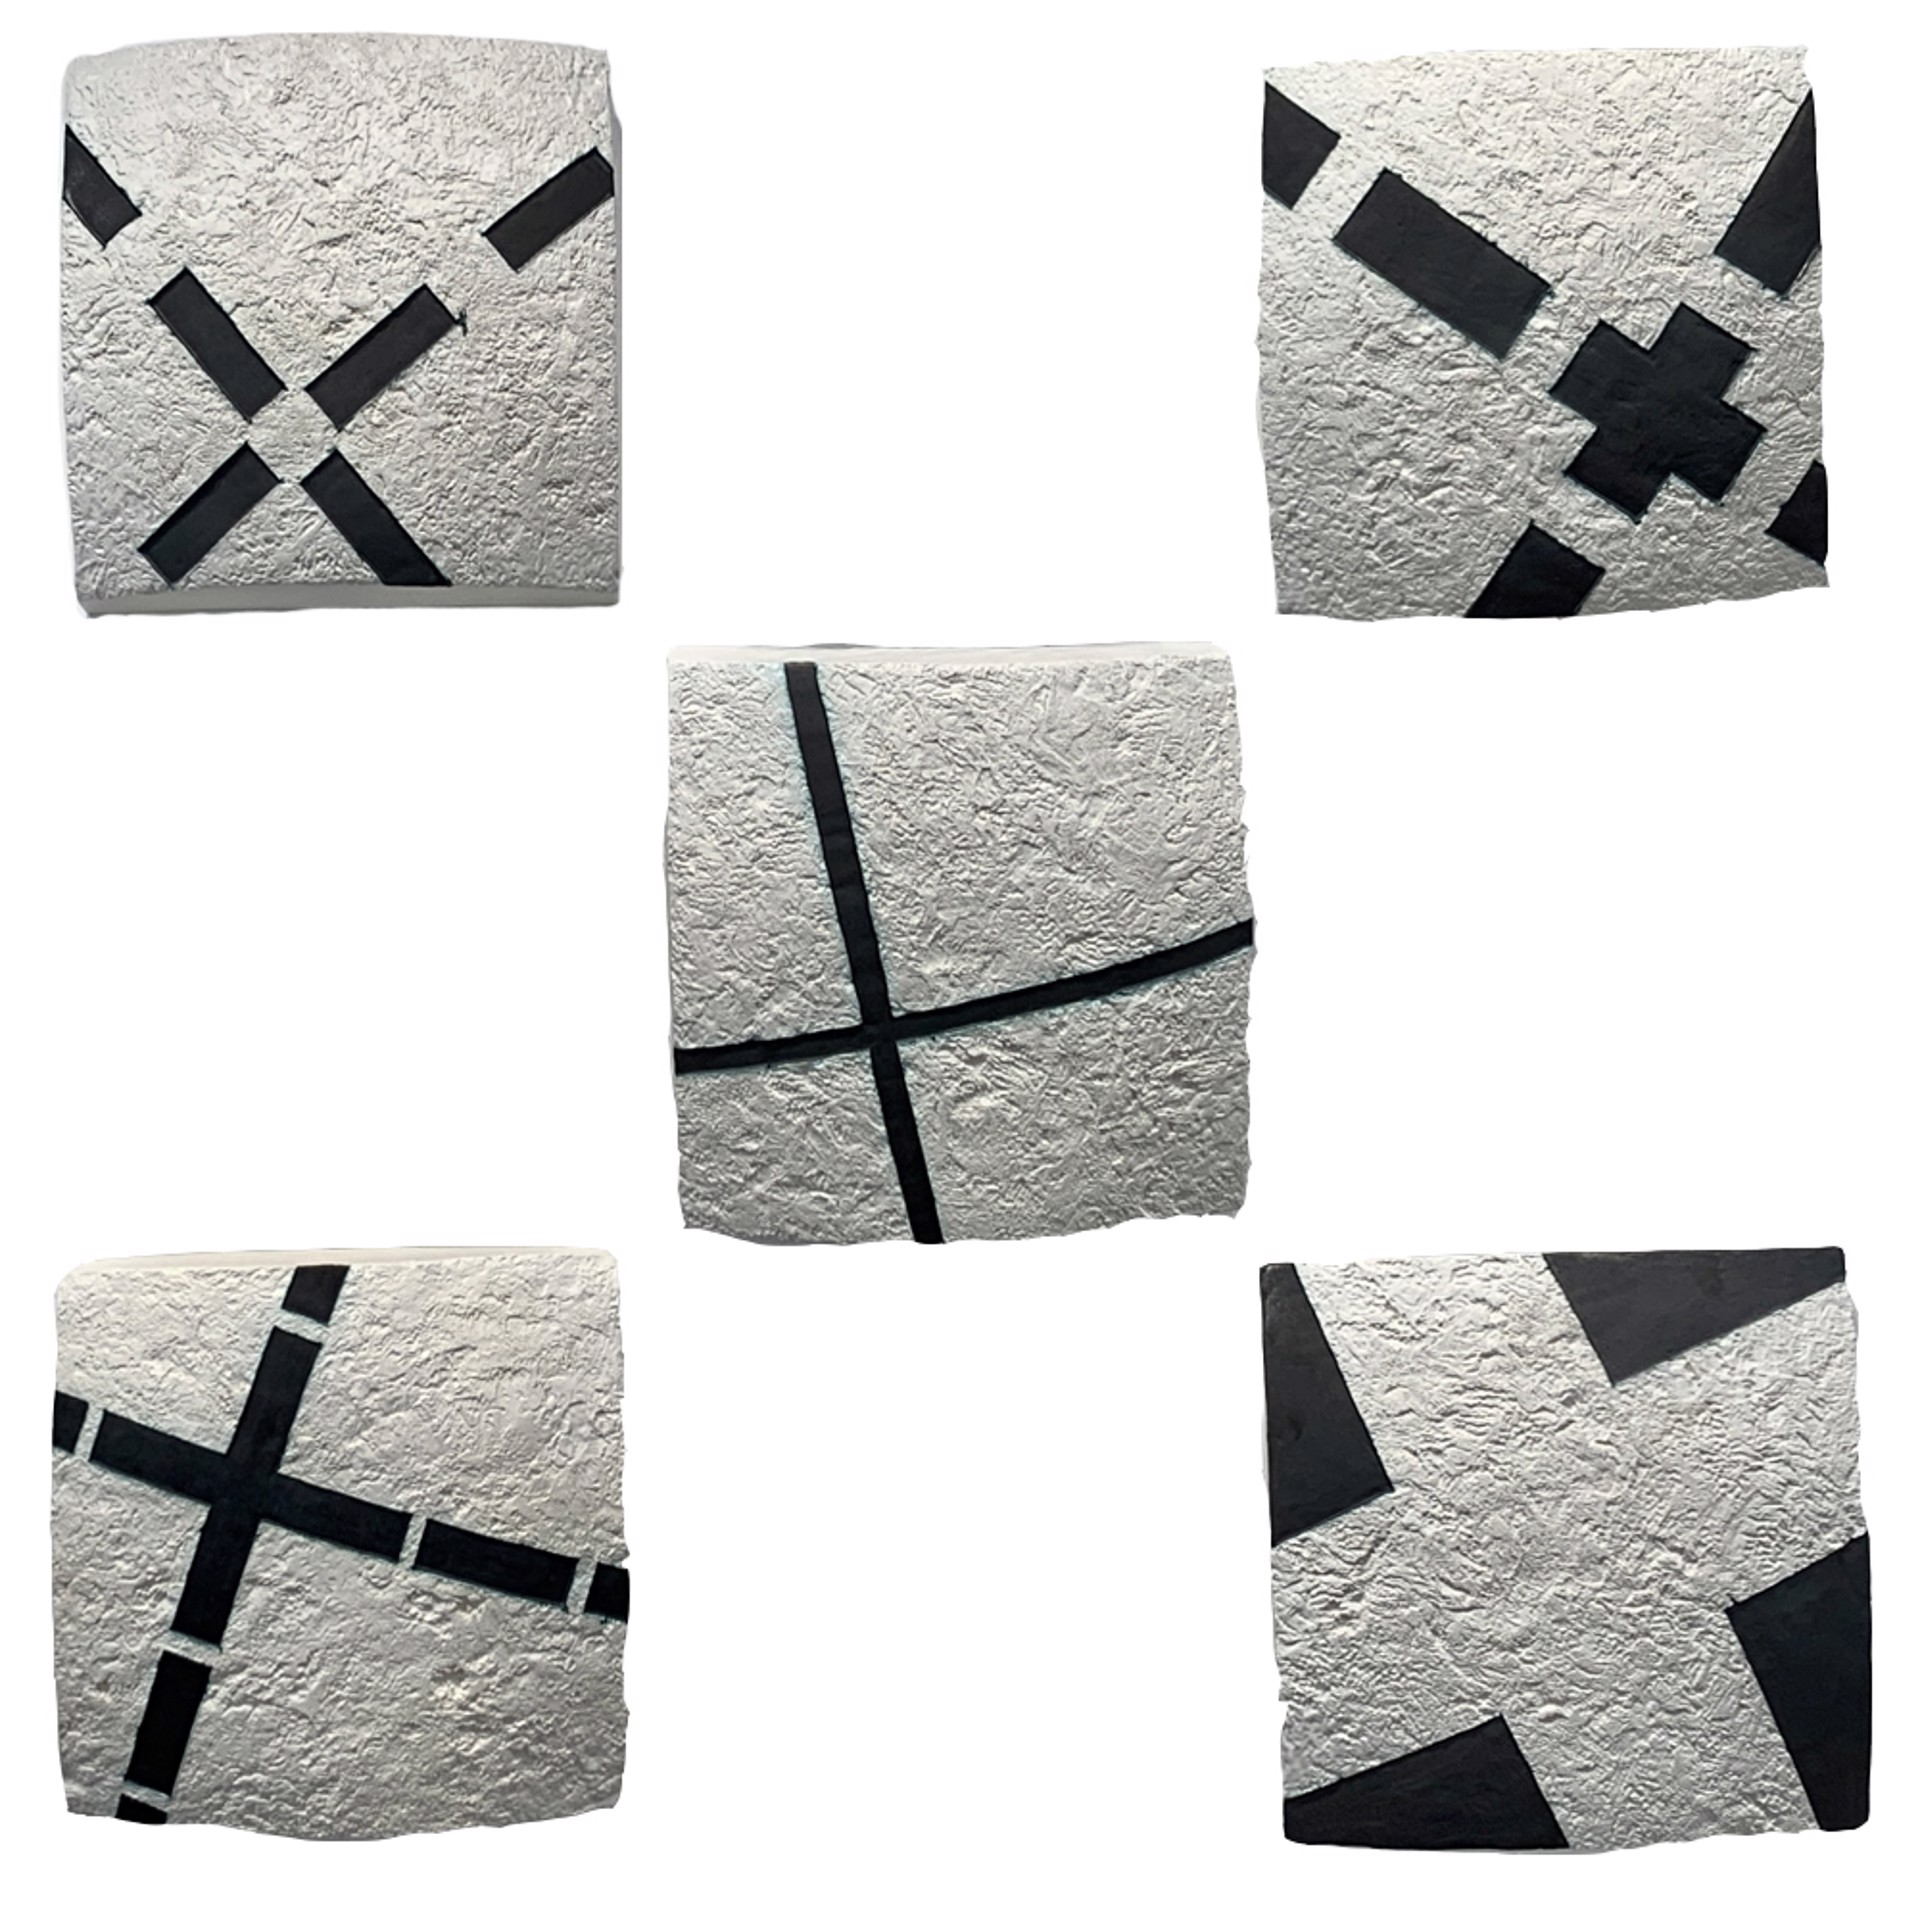 Series X (5 Panels) by Gregor Turk